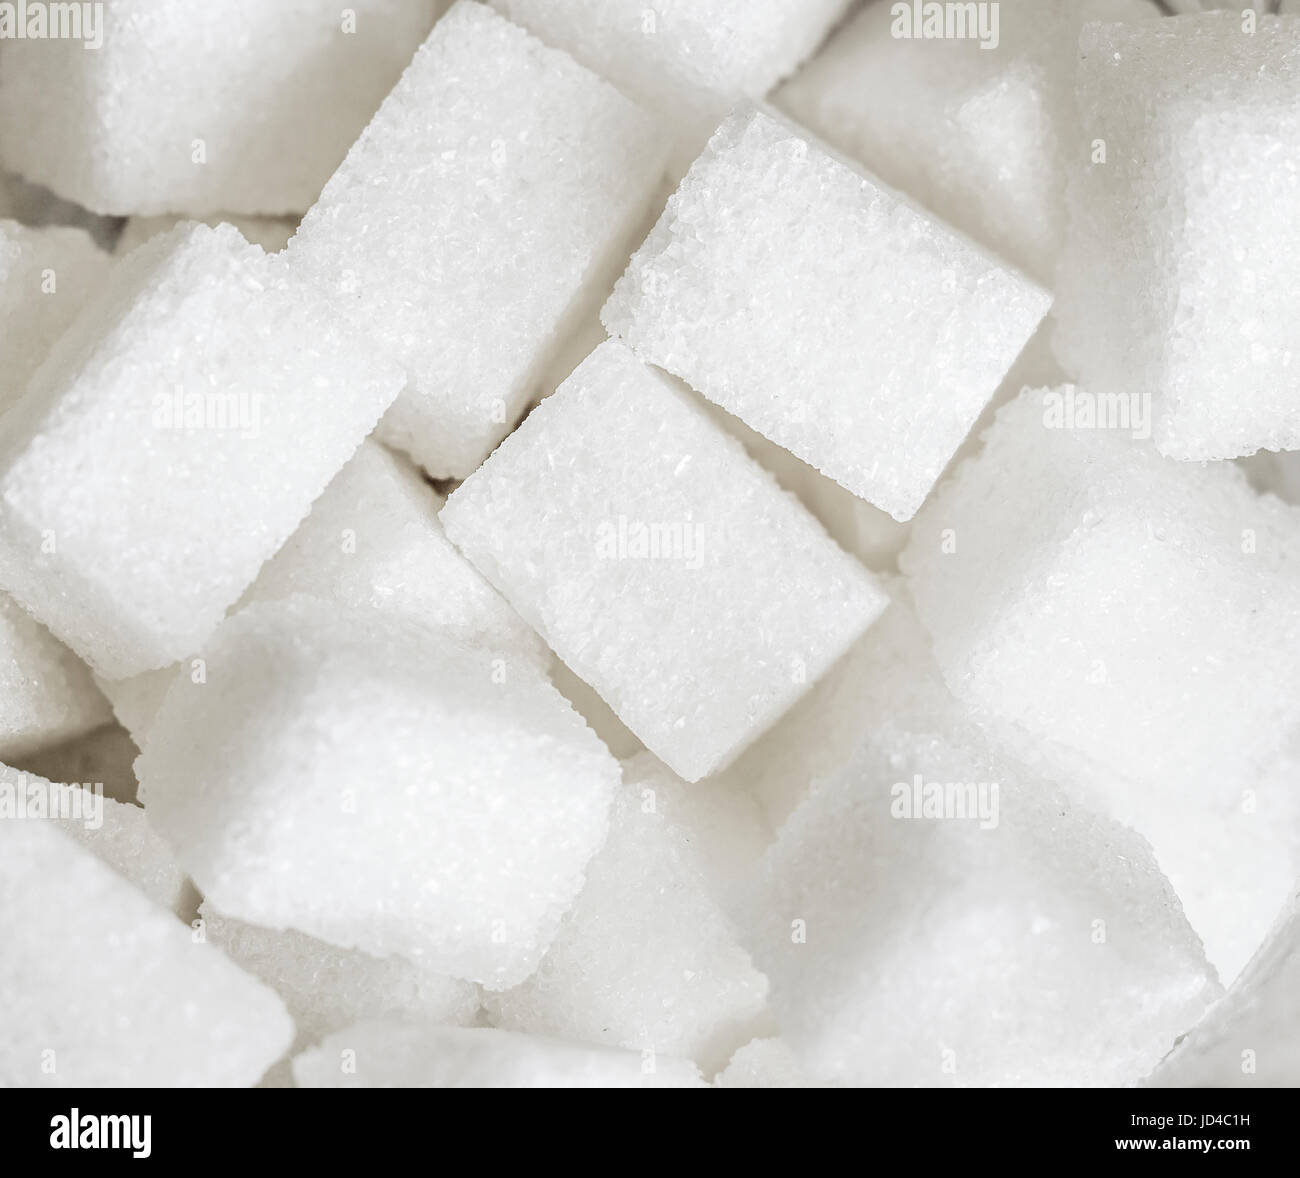 White Sugar cubes closeup Stock Photo - Alamy